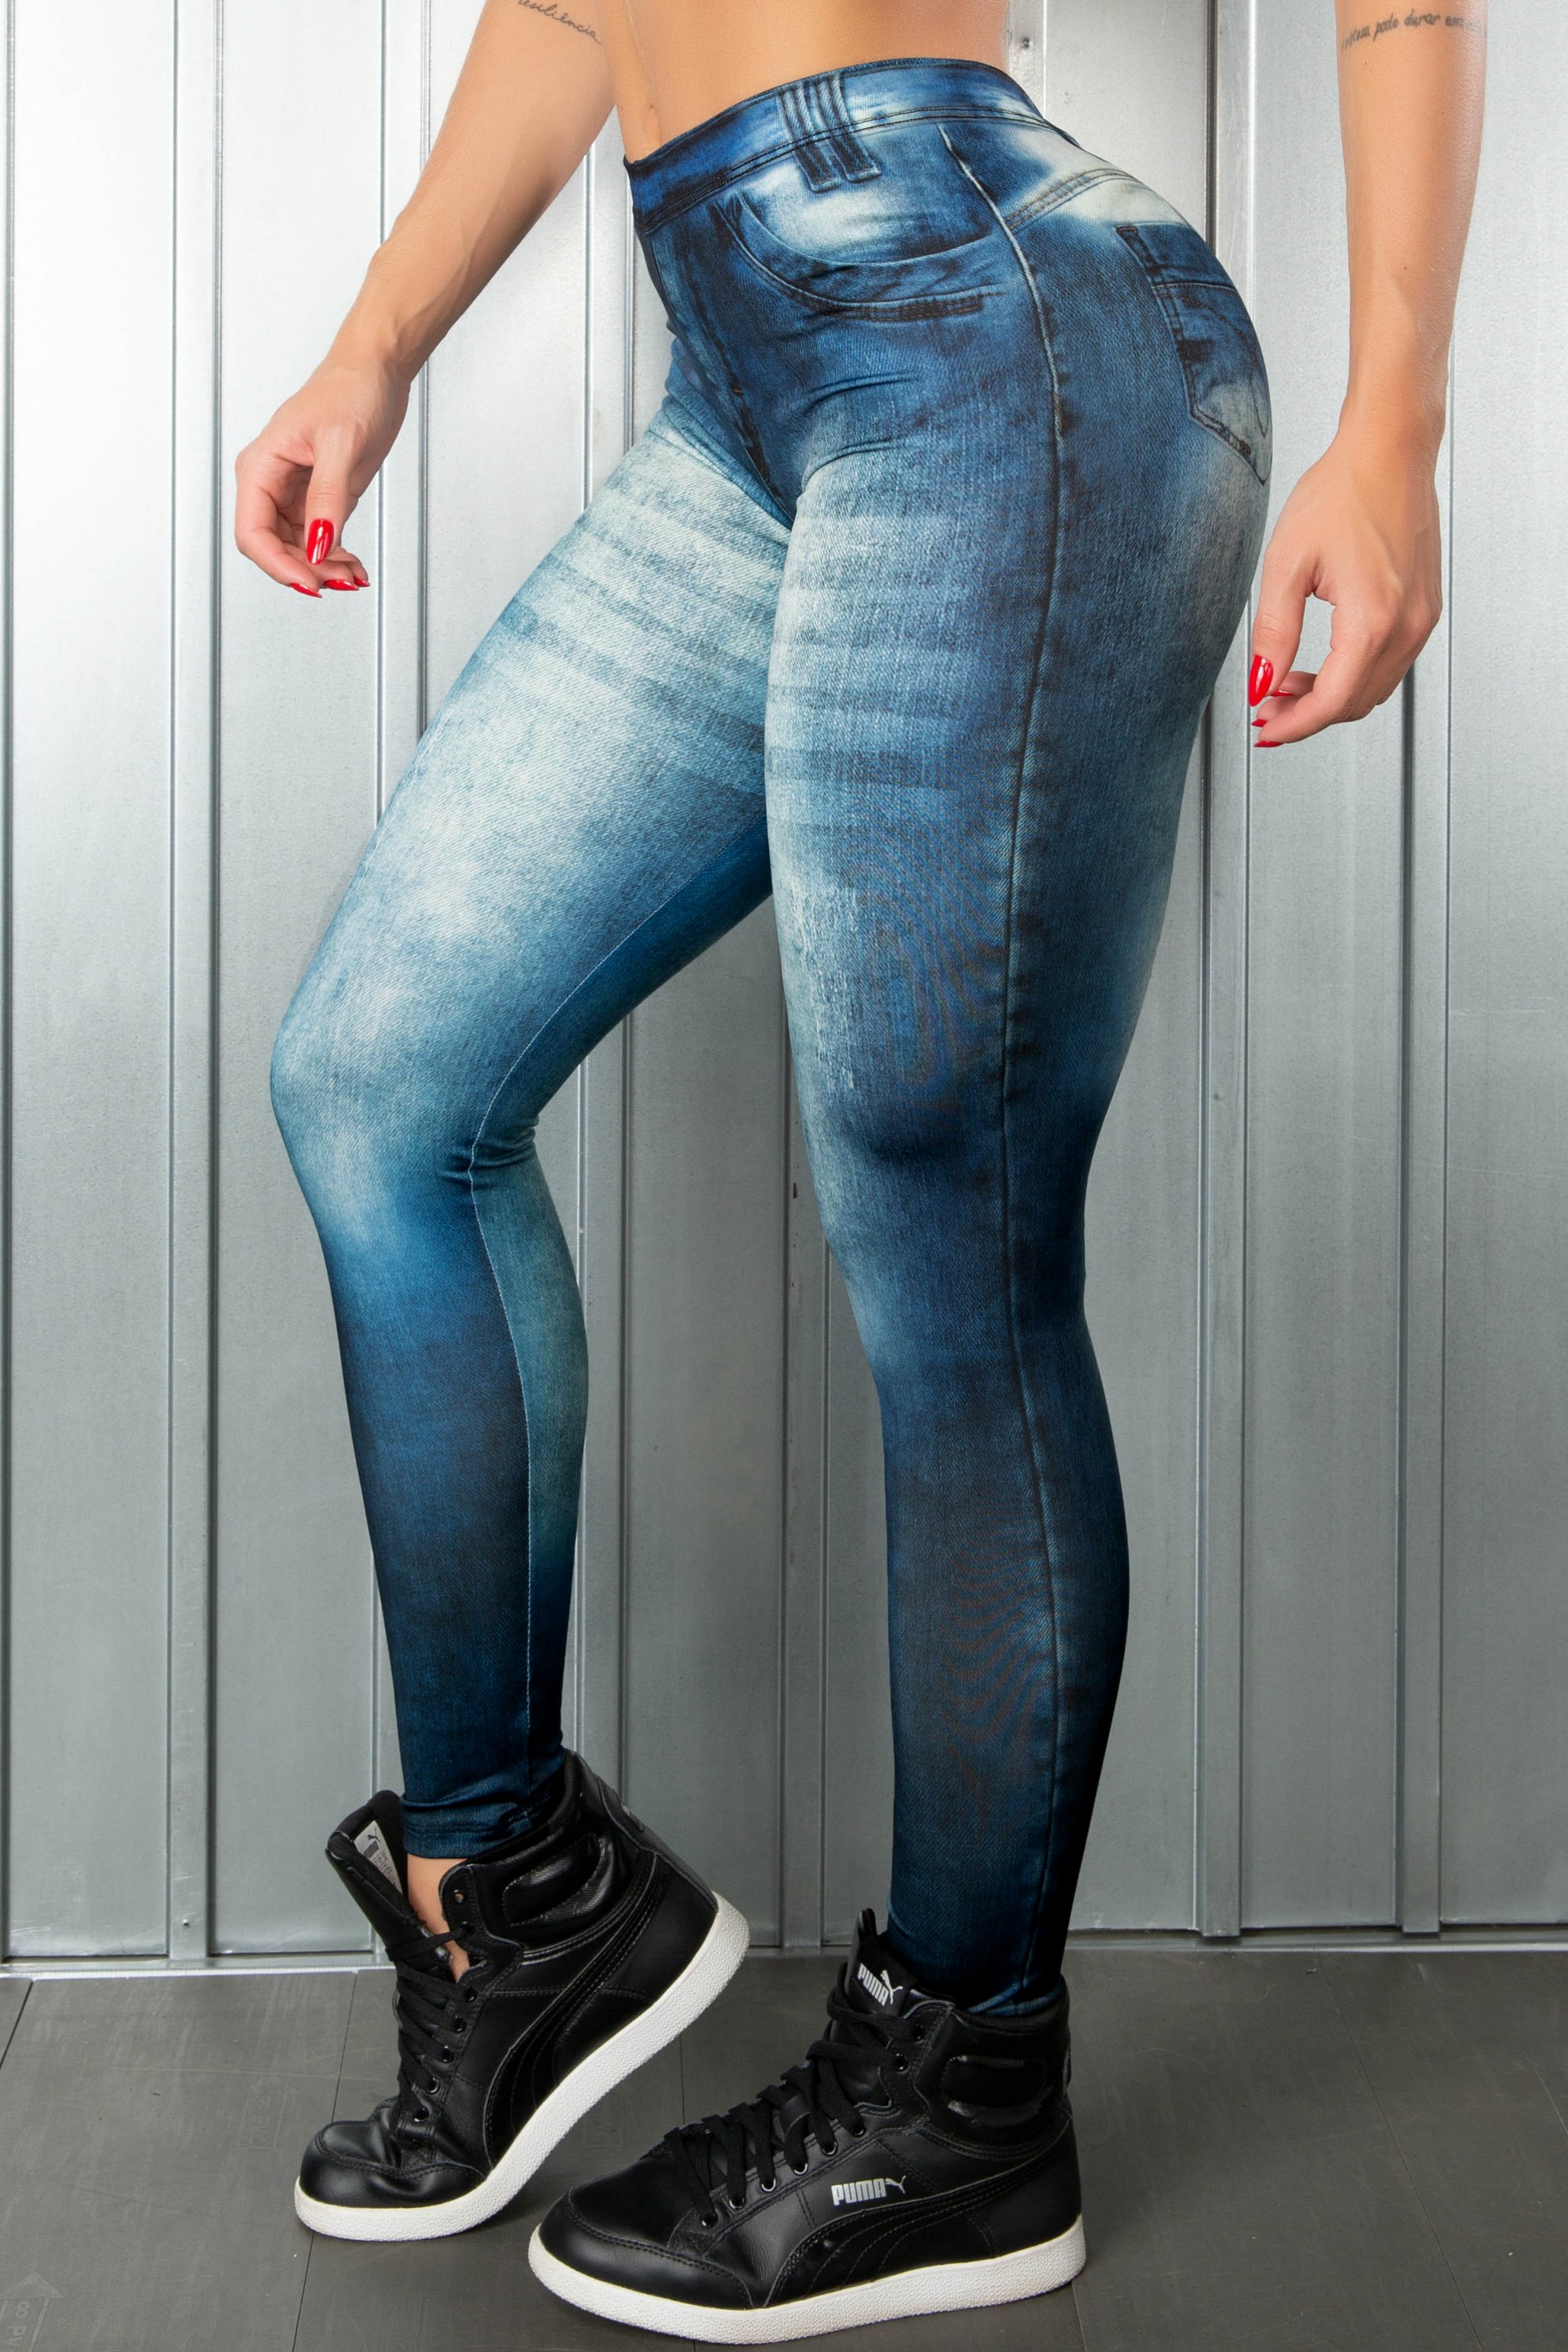 Legging Fake Jeans. Brazilian fake jean leggings. Fit fashion